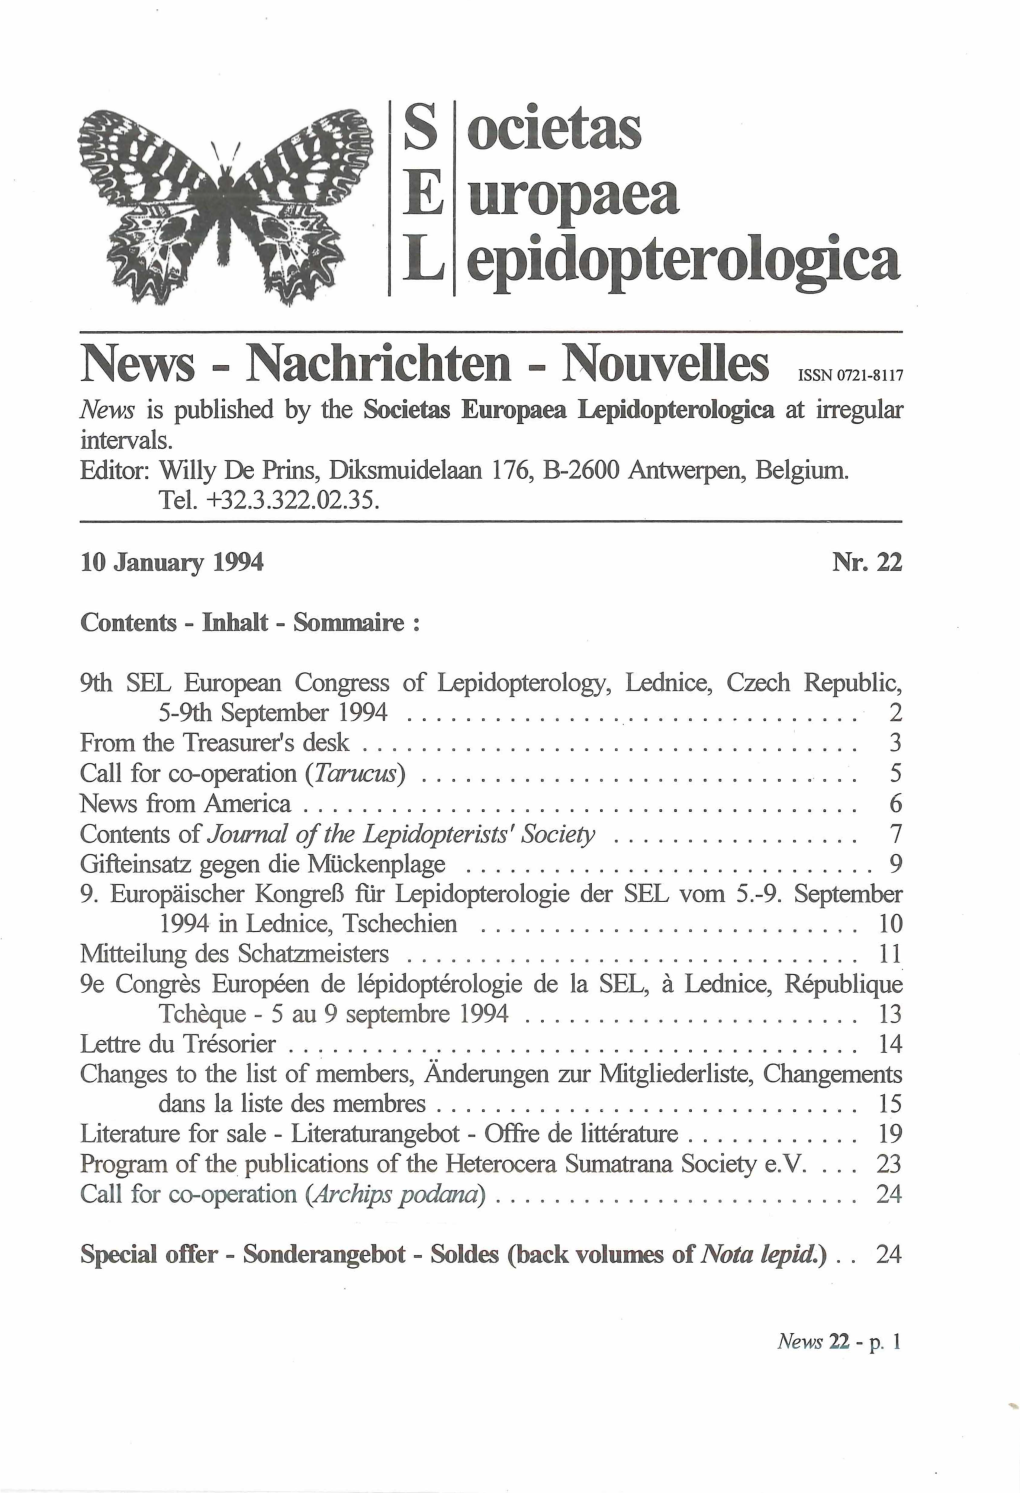 Newsletter of the Societas Europaea Lepidopterologica 22